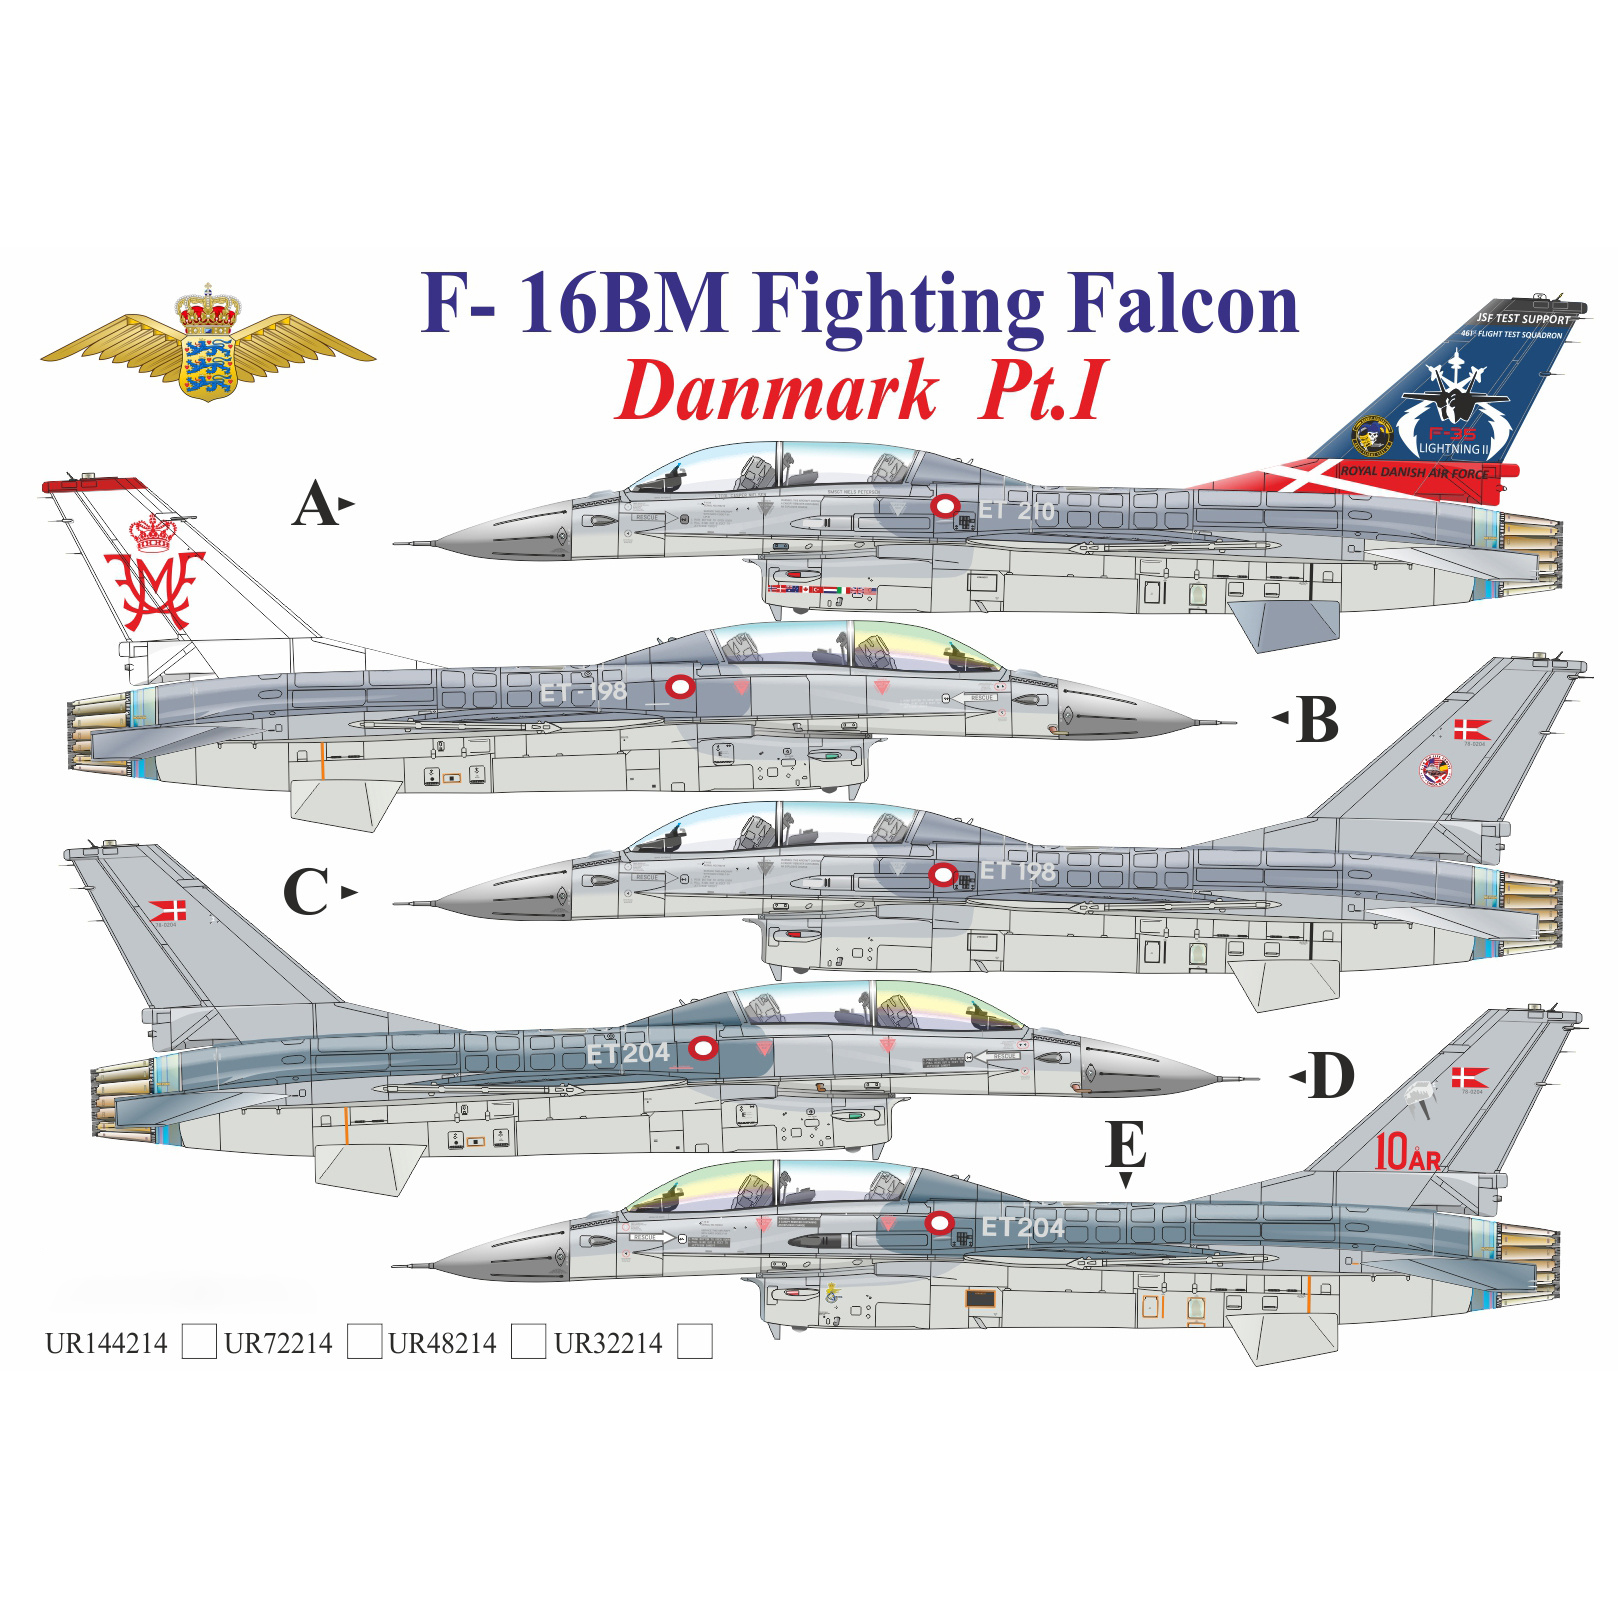 Декали UpRise 1/72 для F-16BM Fighting Falcon Danmark Pt.1 UR72214